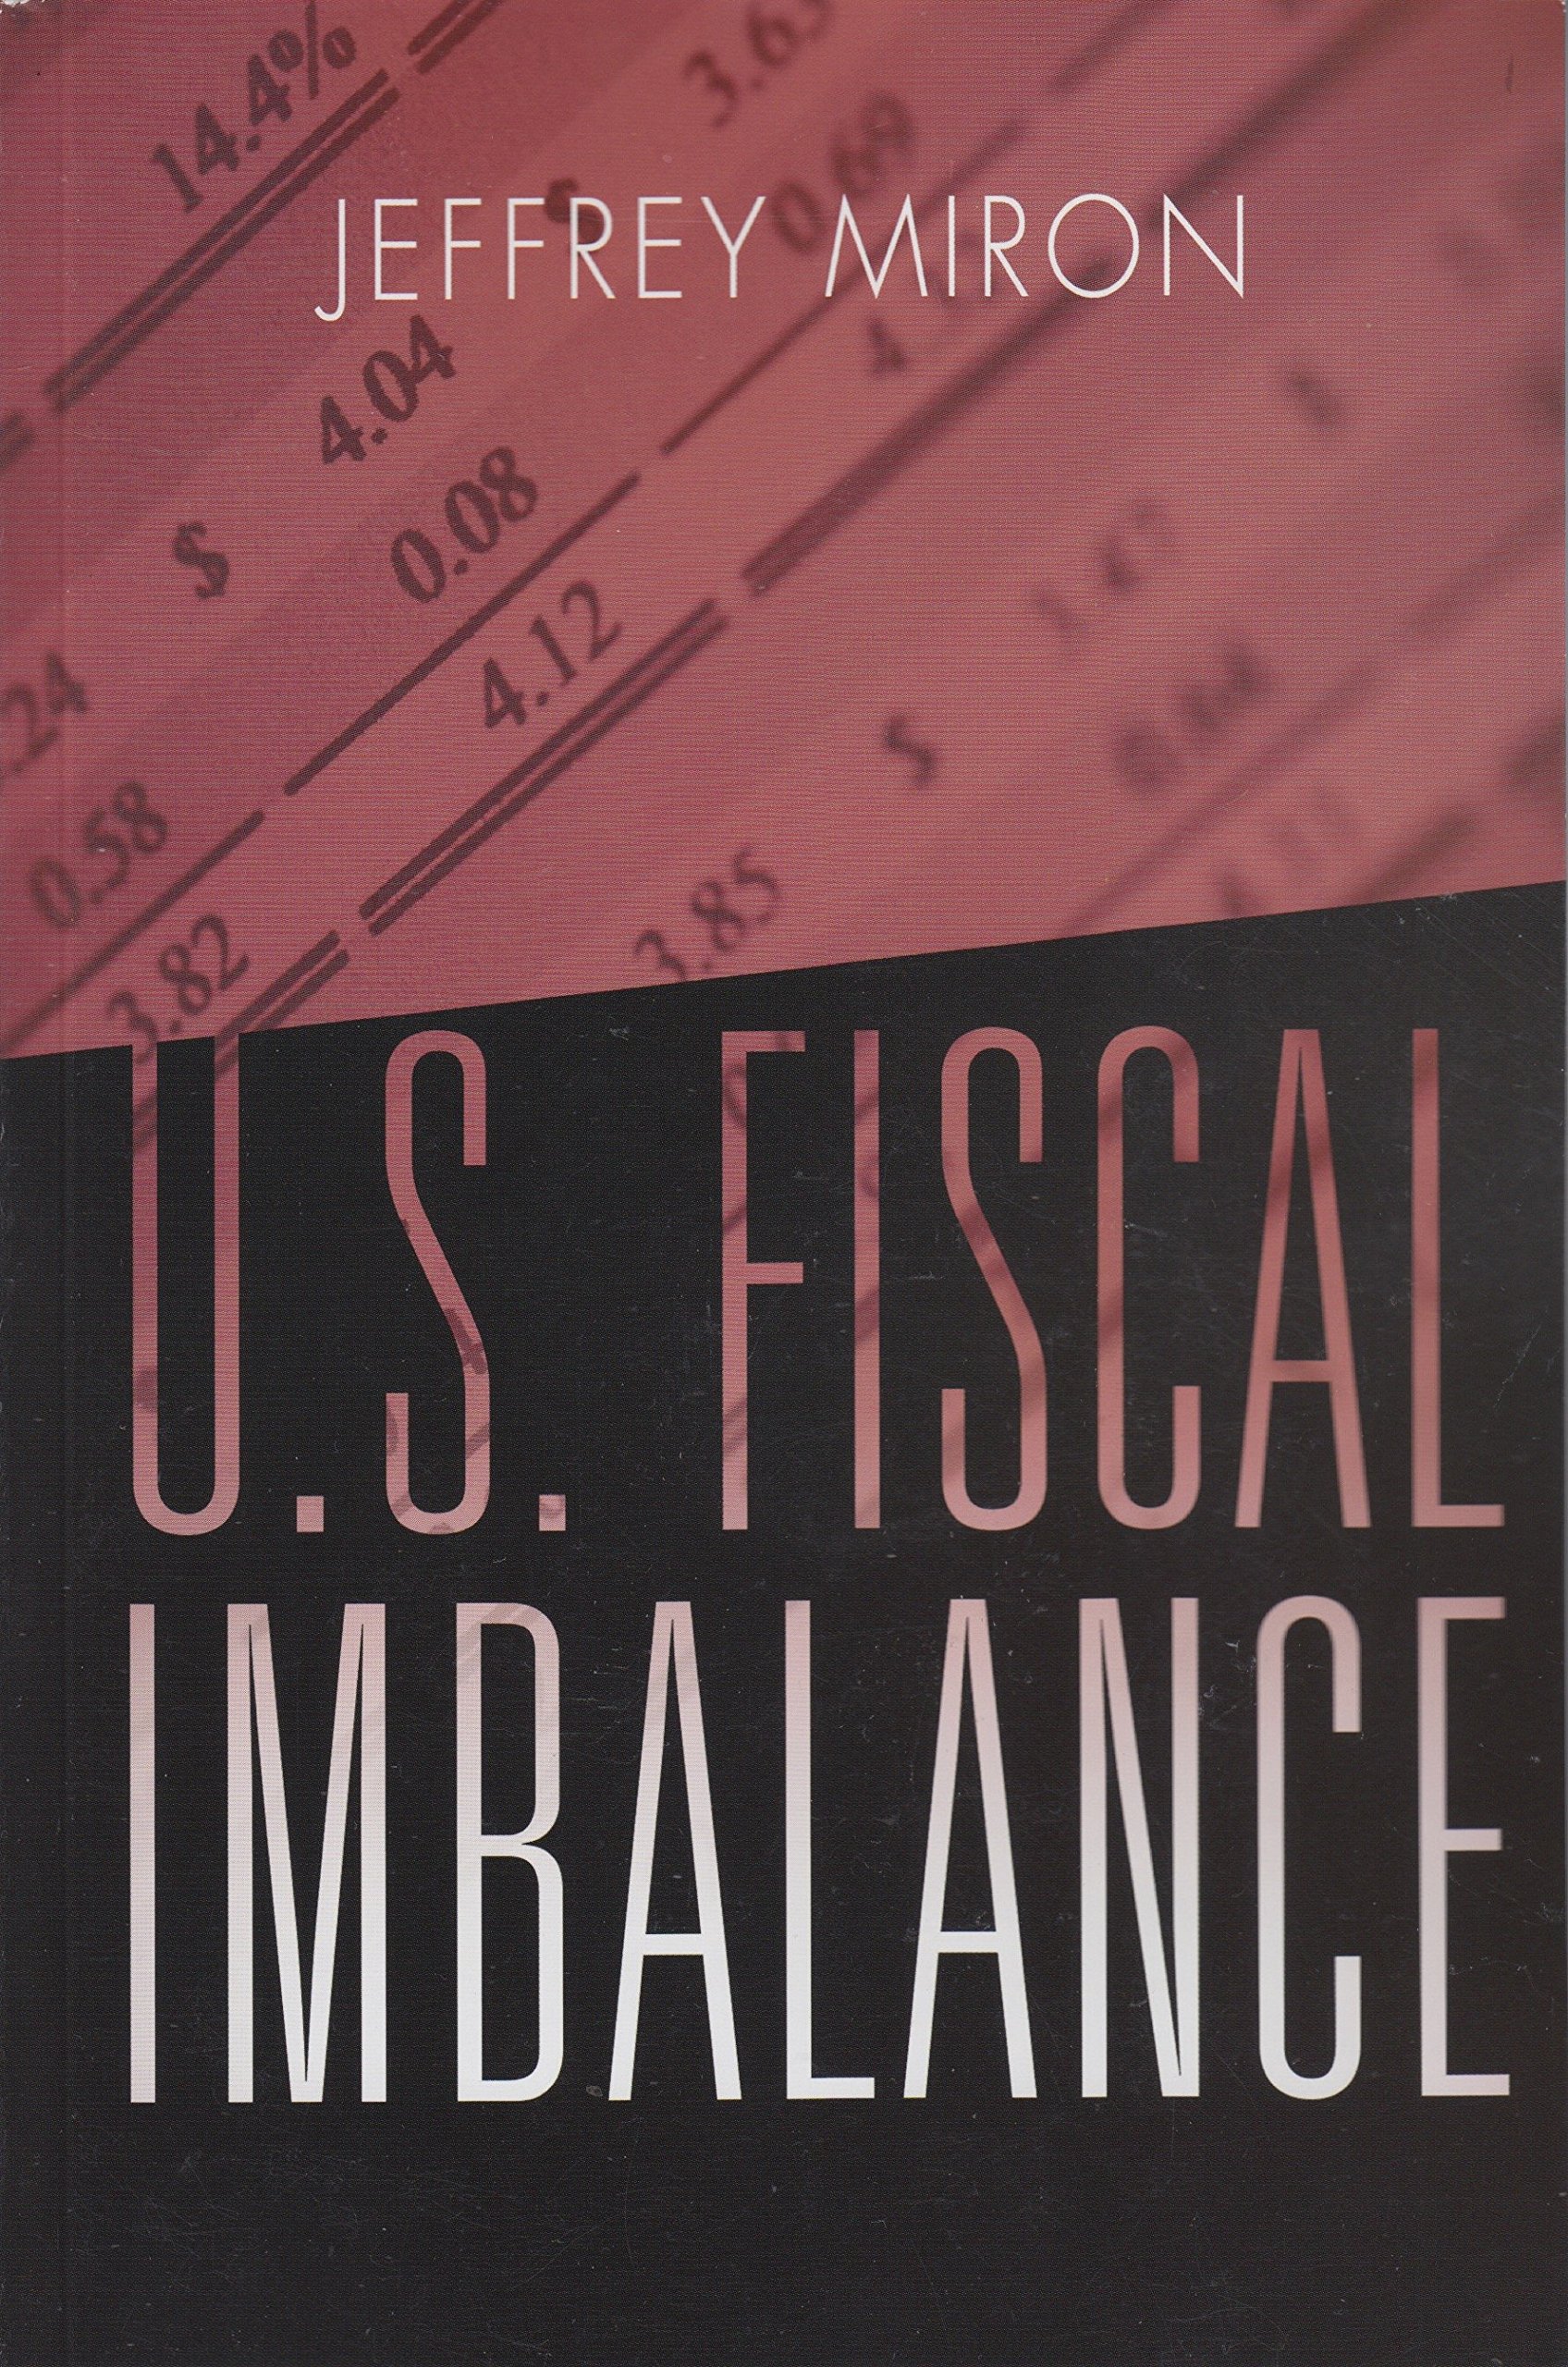 U.S. Fiscal Imbalance